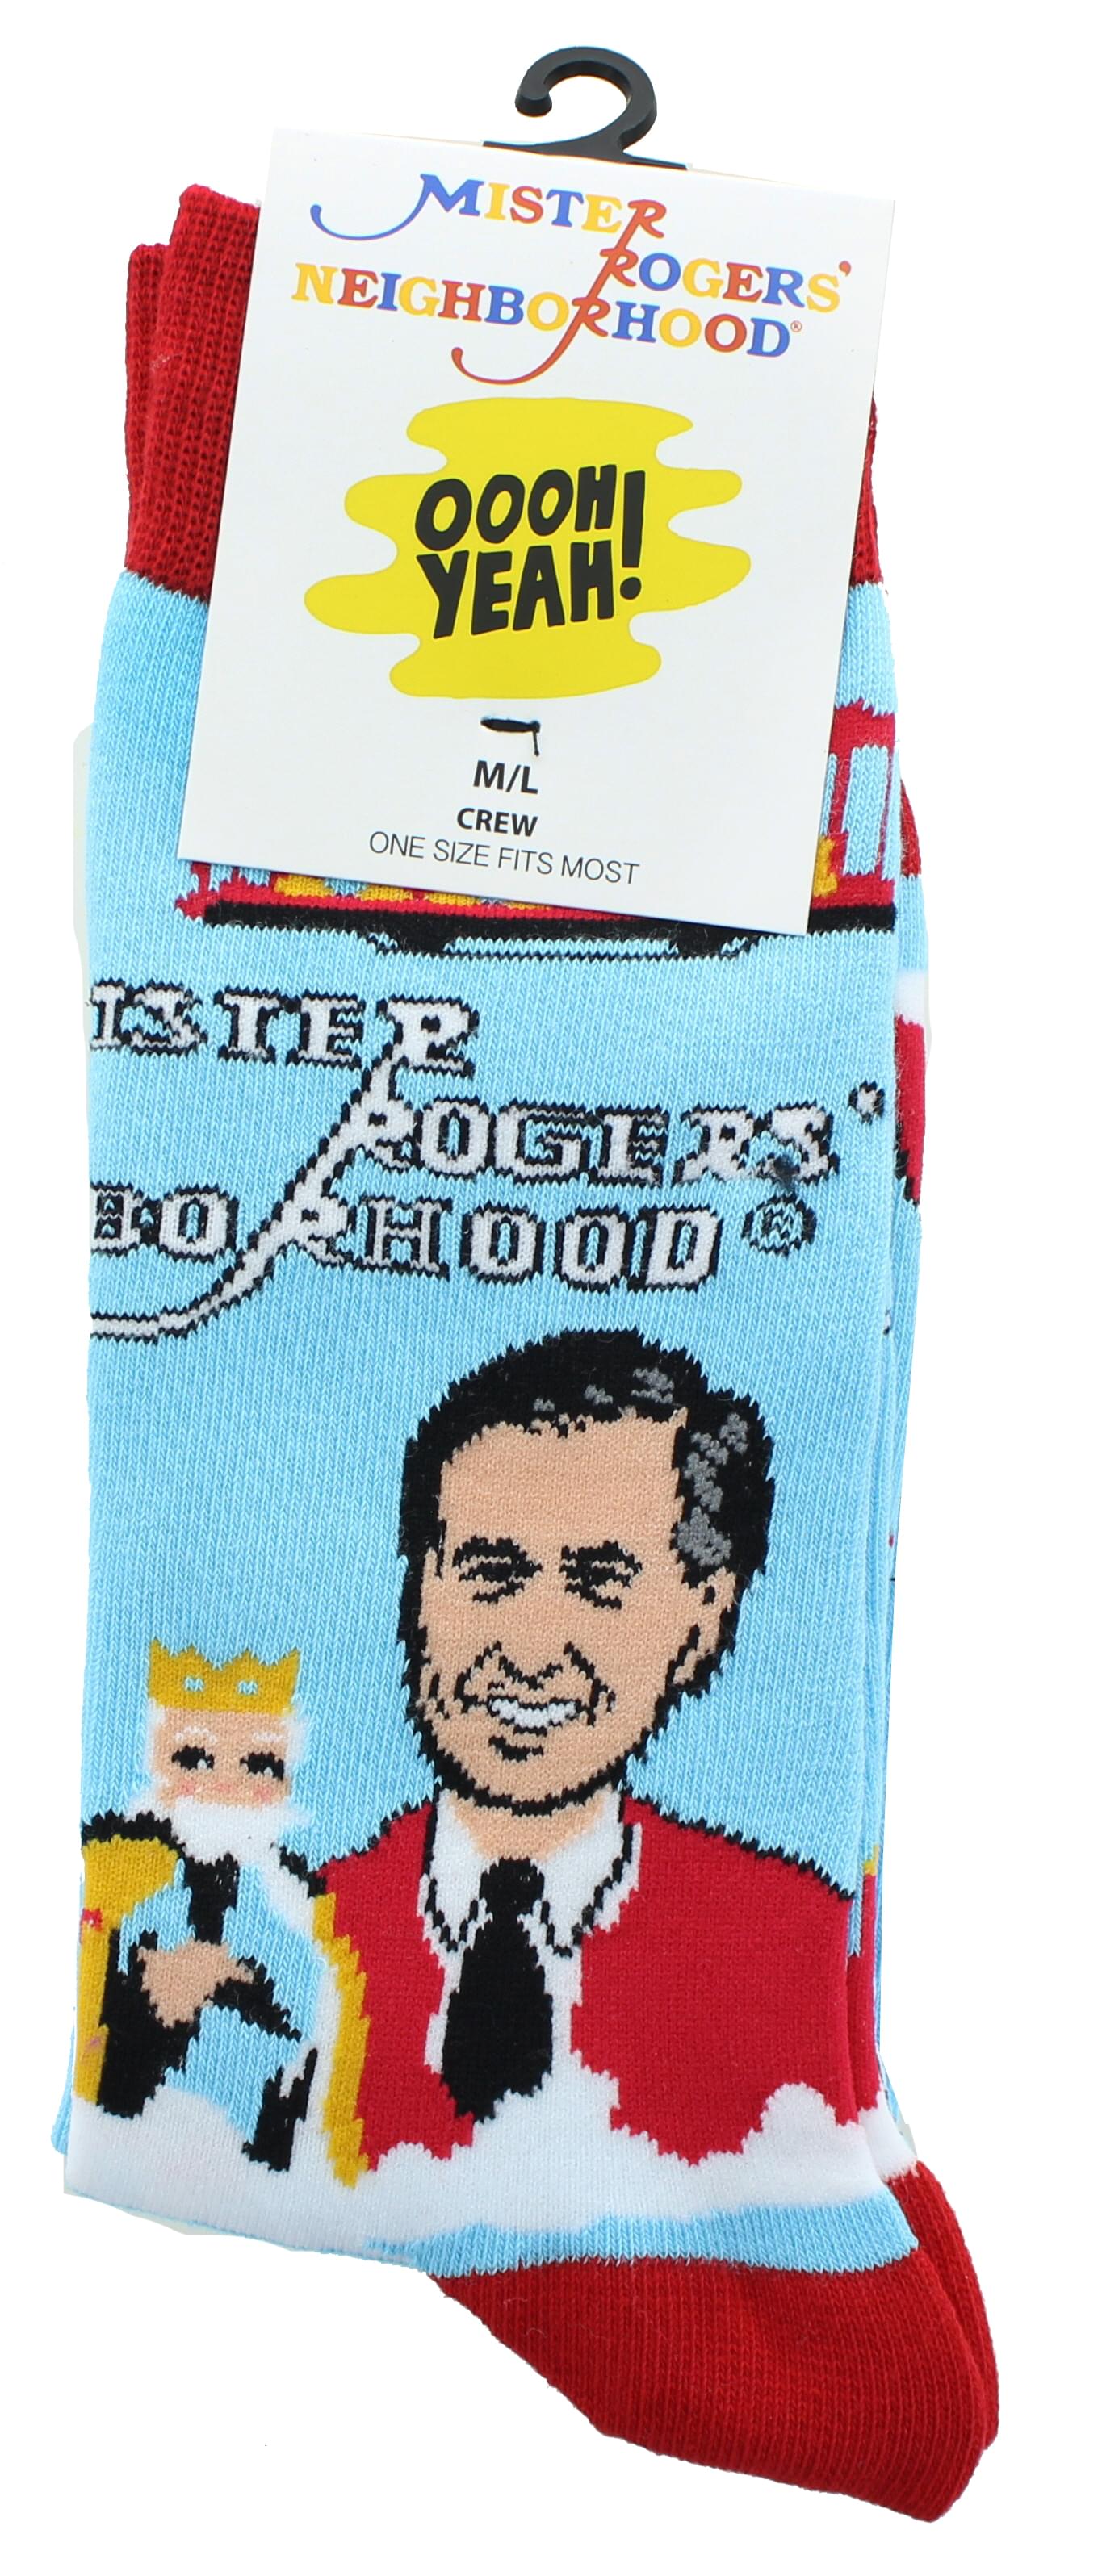 Mister Rogers Neighborhood Good Day Men's Crew Socks | One Size